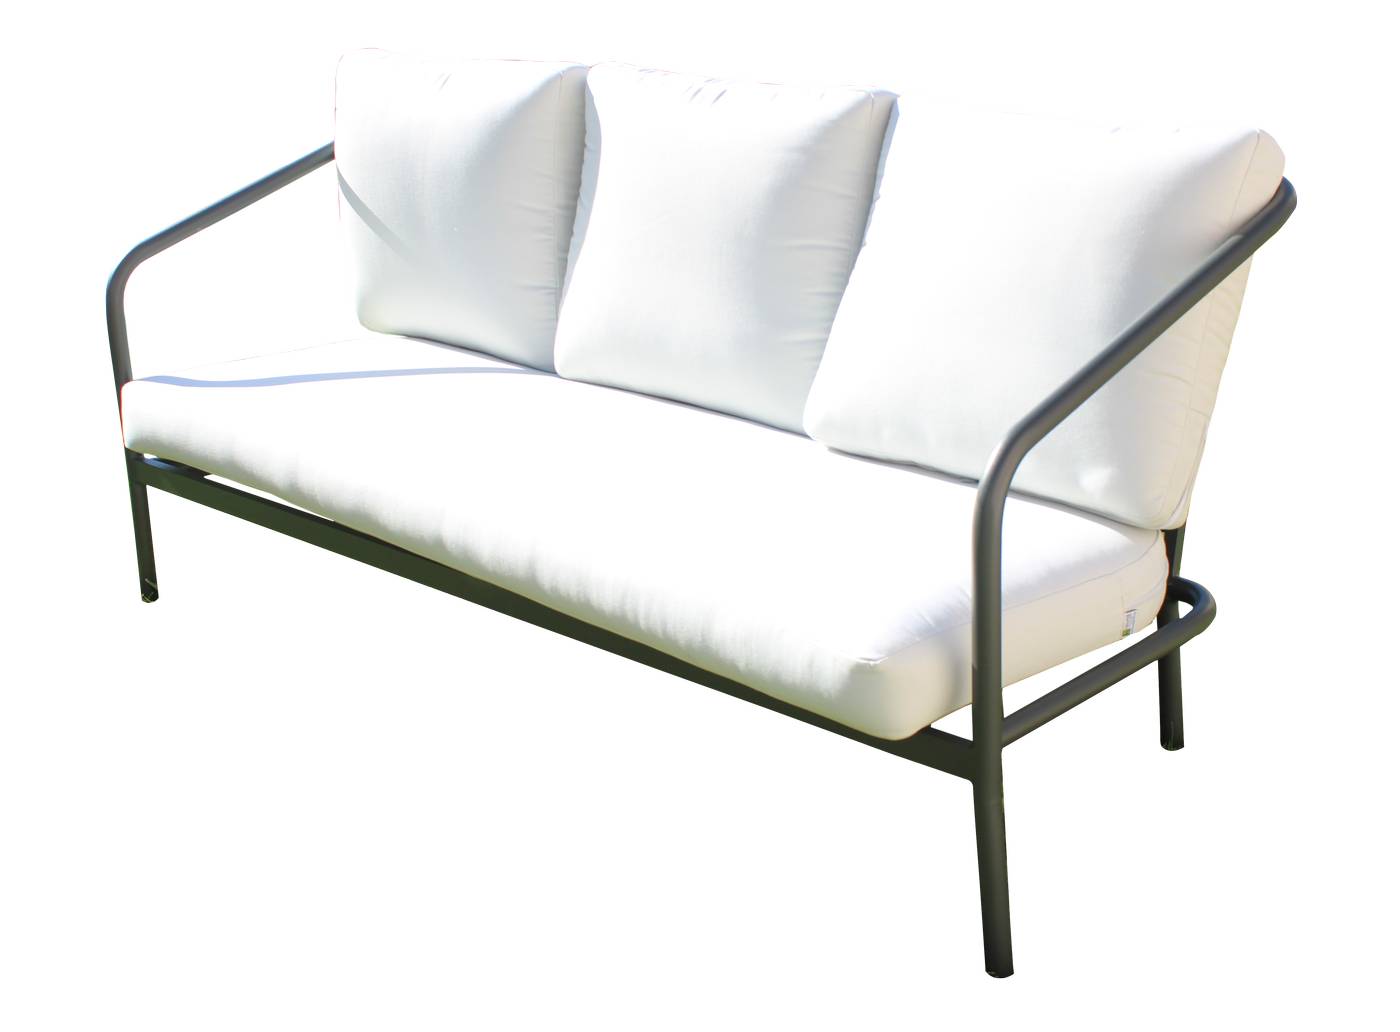 Set Aluminio Alexis-10 - Conjunto: 1 sofá 3 plazas + 2 sillones + 1 mesa de centro + 2 taburetes/repoaspiés. Estructura aluminio color blanco, antracita, champagne, plata o marrón.